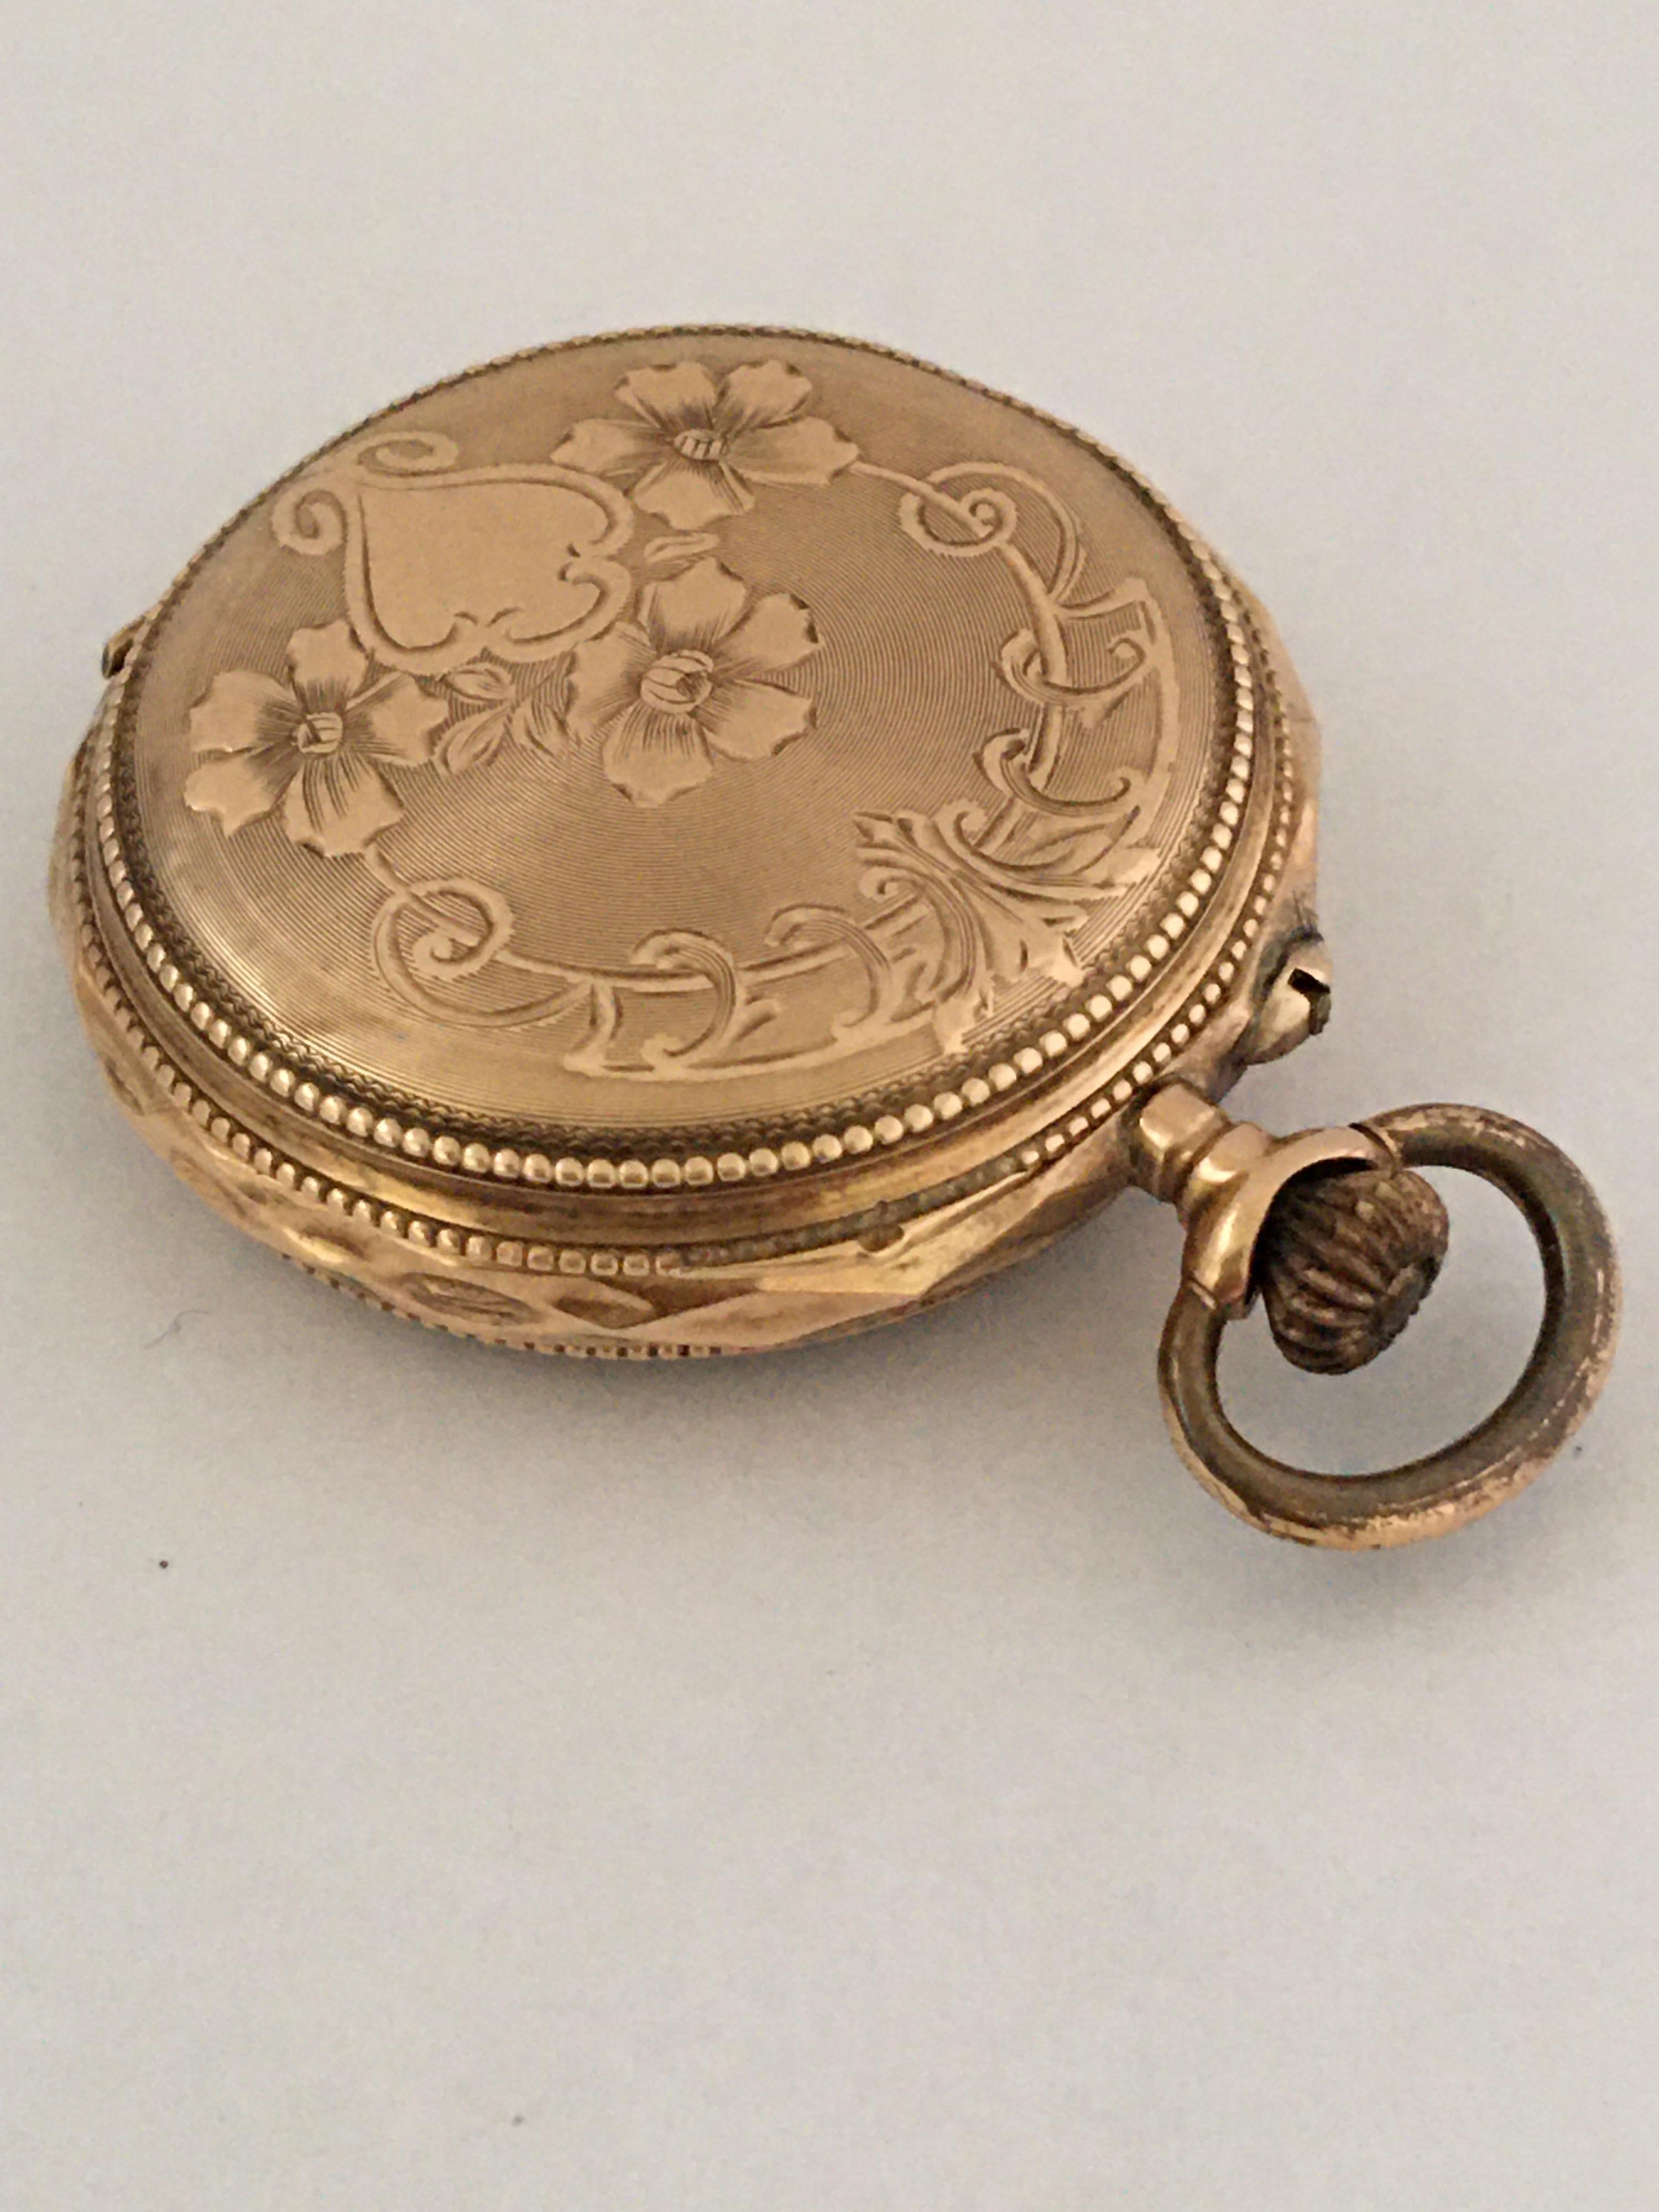 Small 14 Karat Gold Key-Less Fob / Pocket Watch, circa 1900 For Sale 5